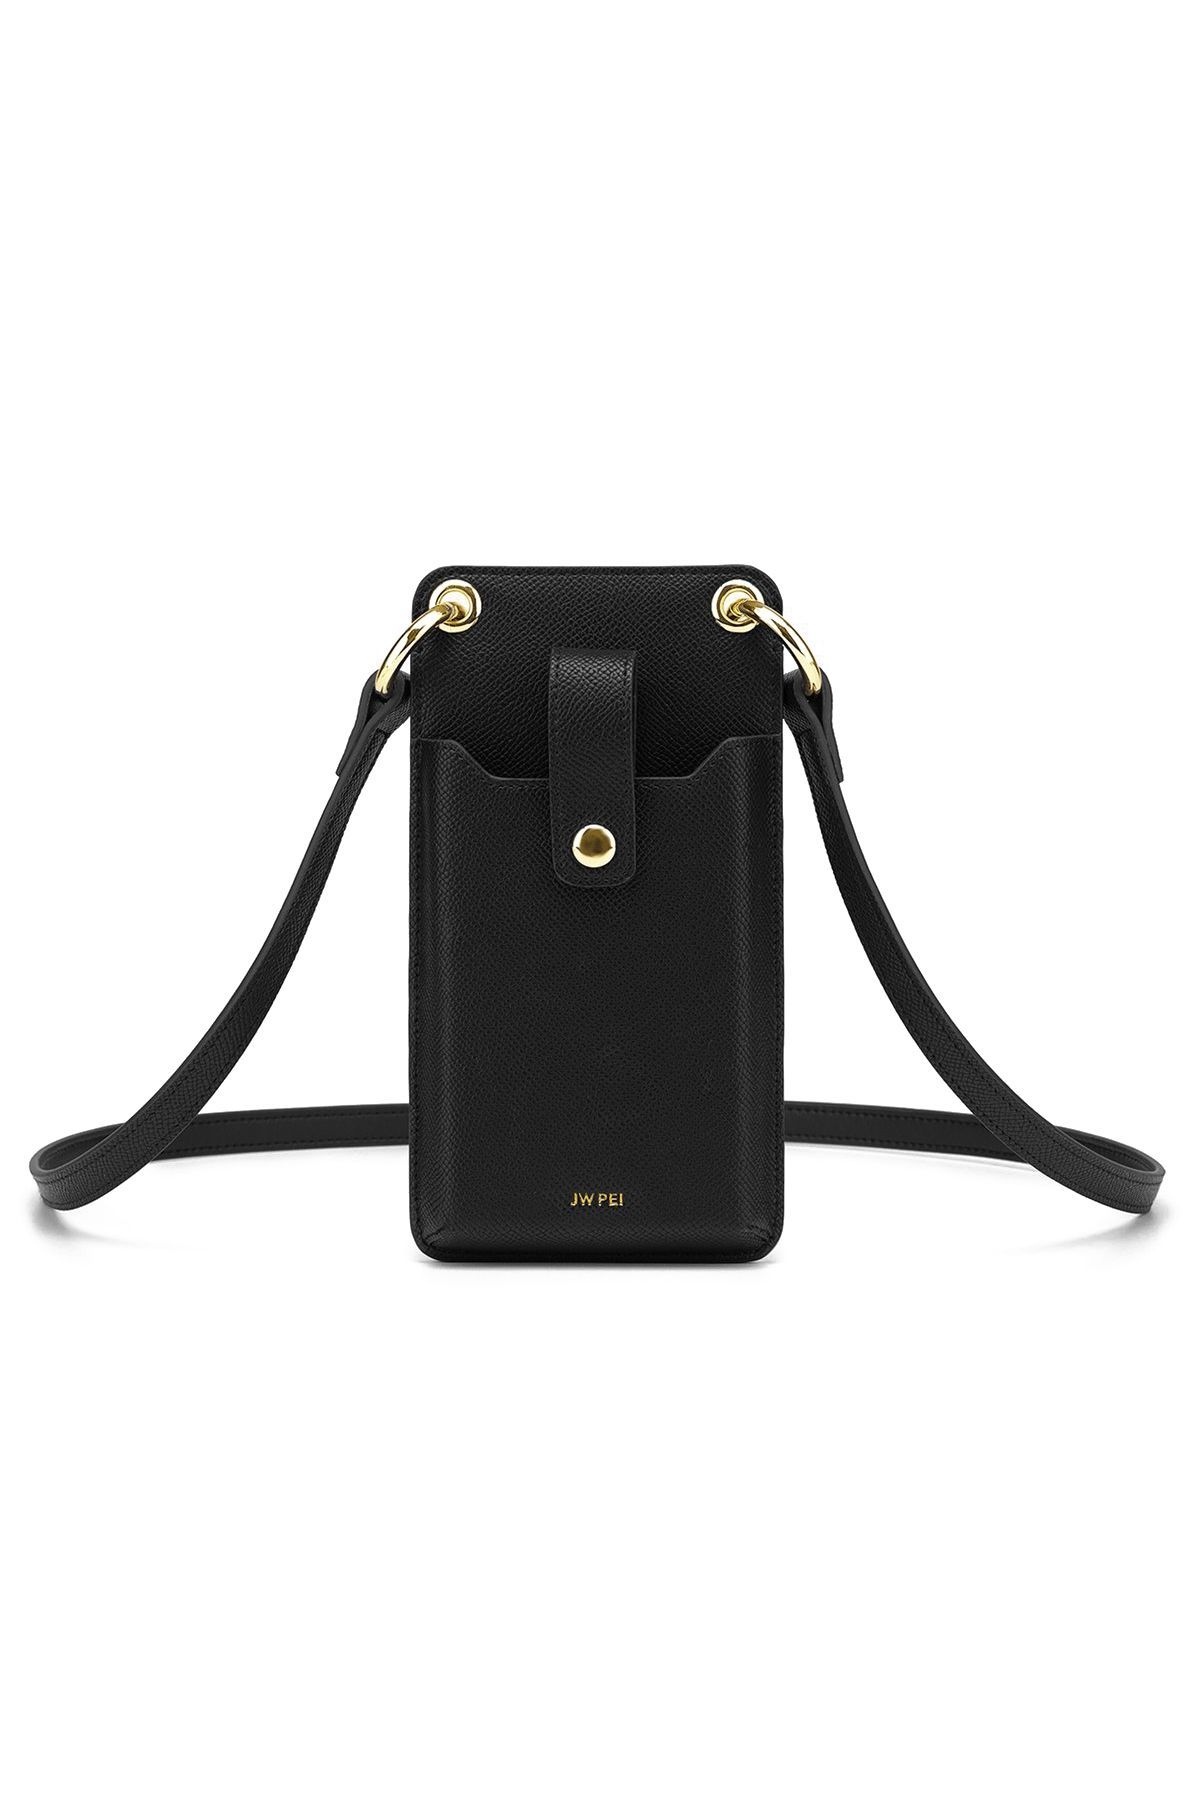 phone purse Small crossbody bag small shoulder bag crossbody phone bag crossbody purse crossbody purse wallet